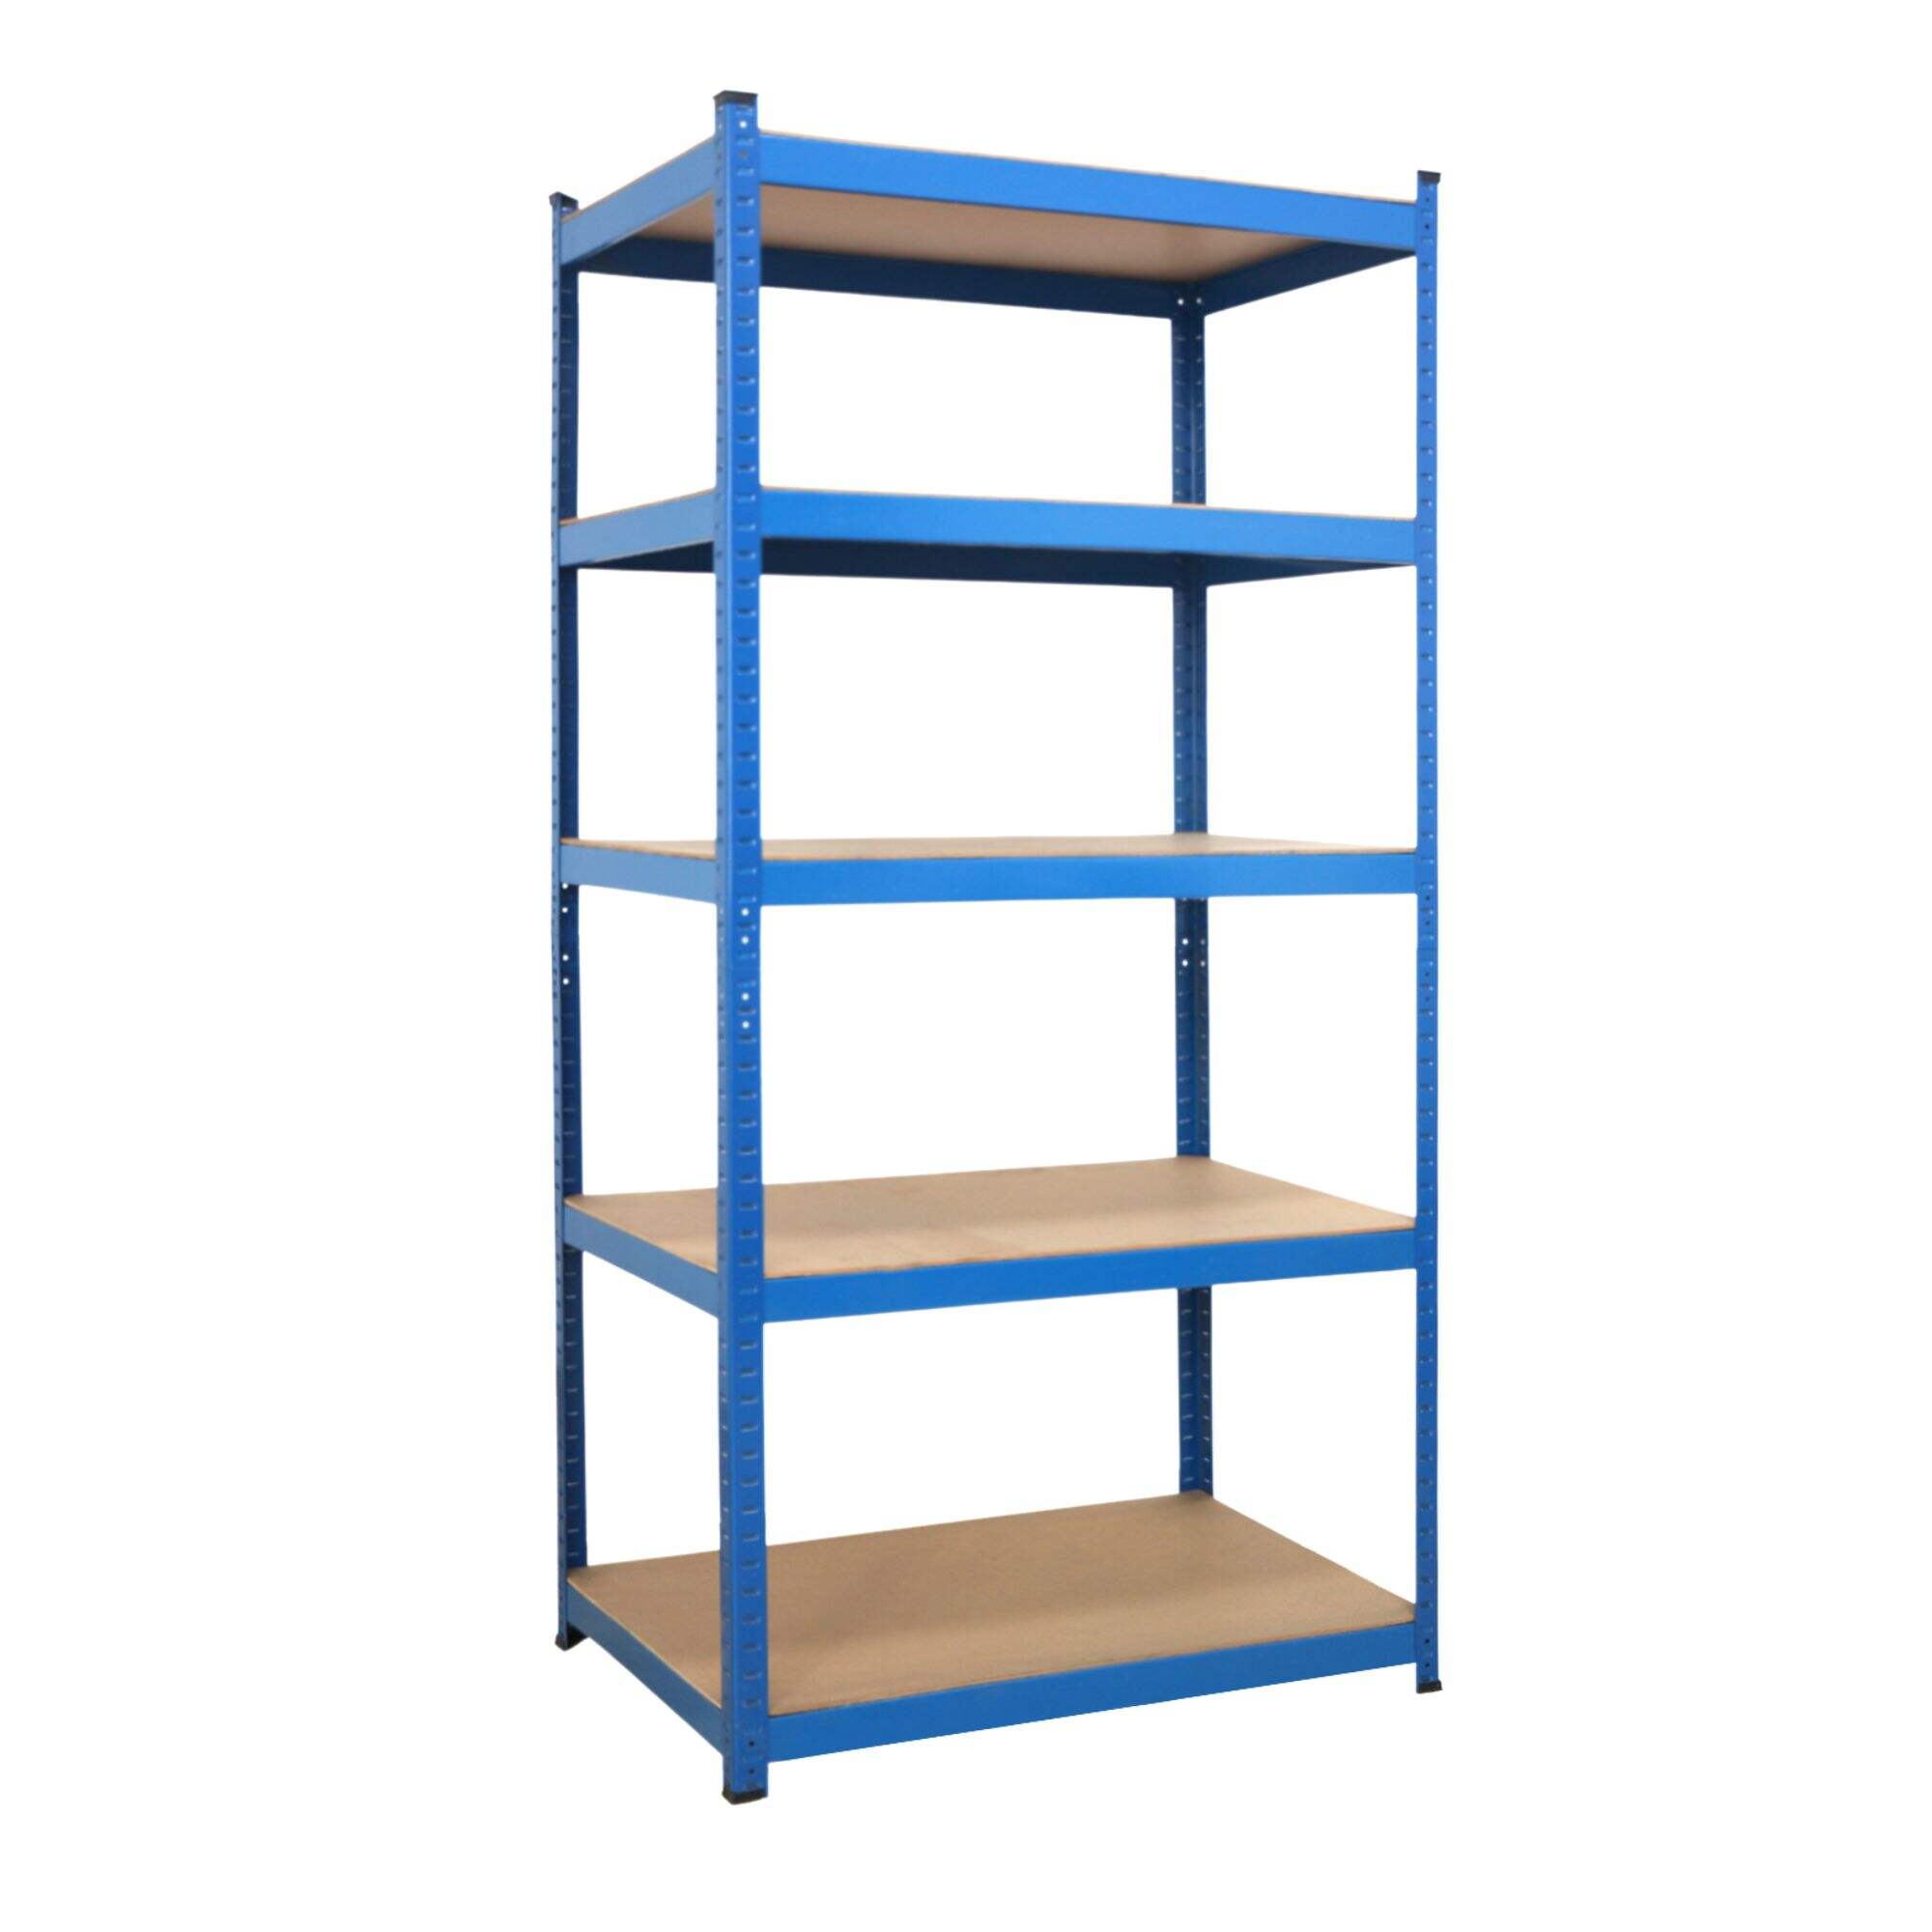 5 Tier Boltless Utility Metal Rack, Adjustable Steel Shelves, Garage Storage Shelving, for Warehouse Pantry Closet Kitchen